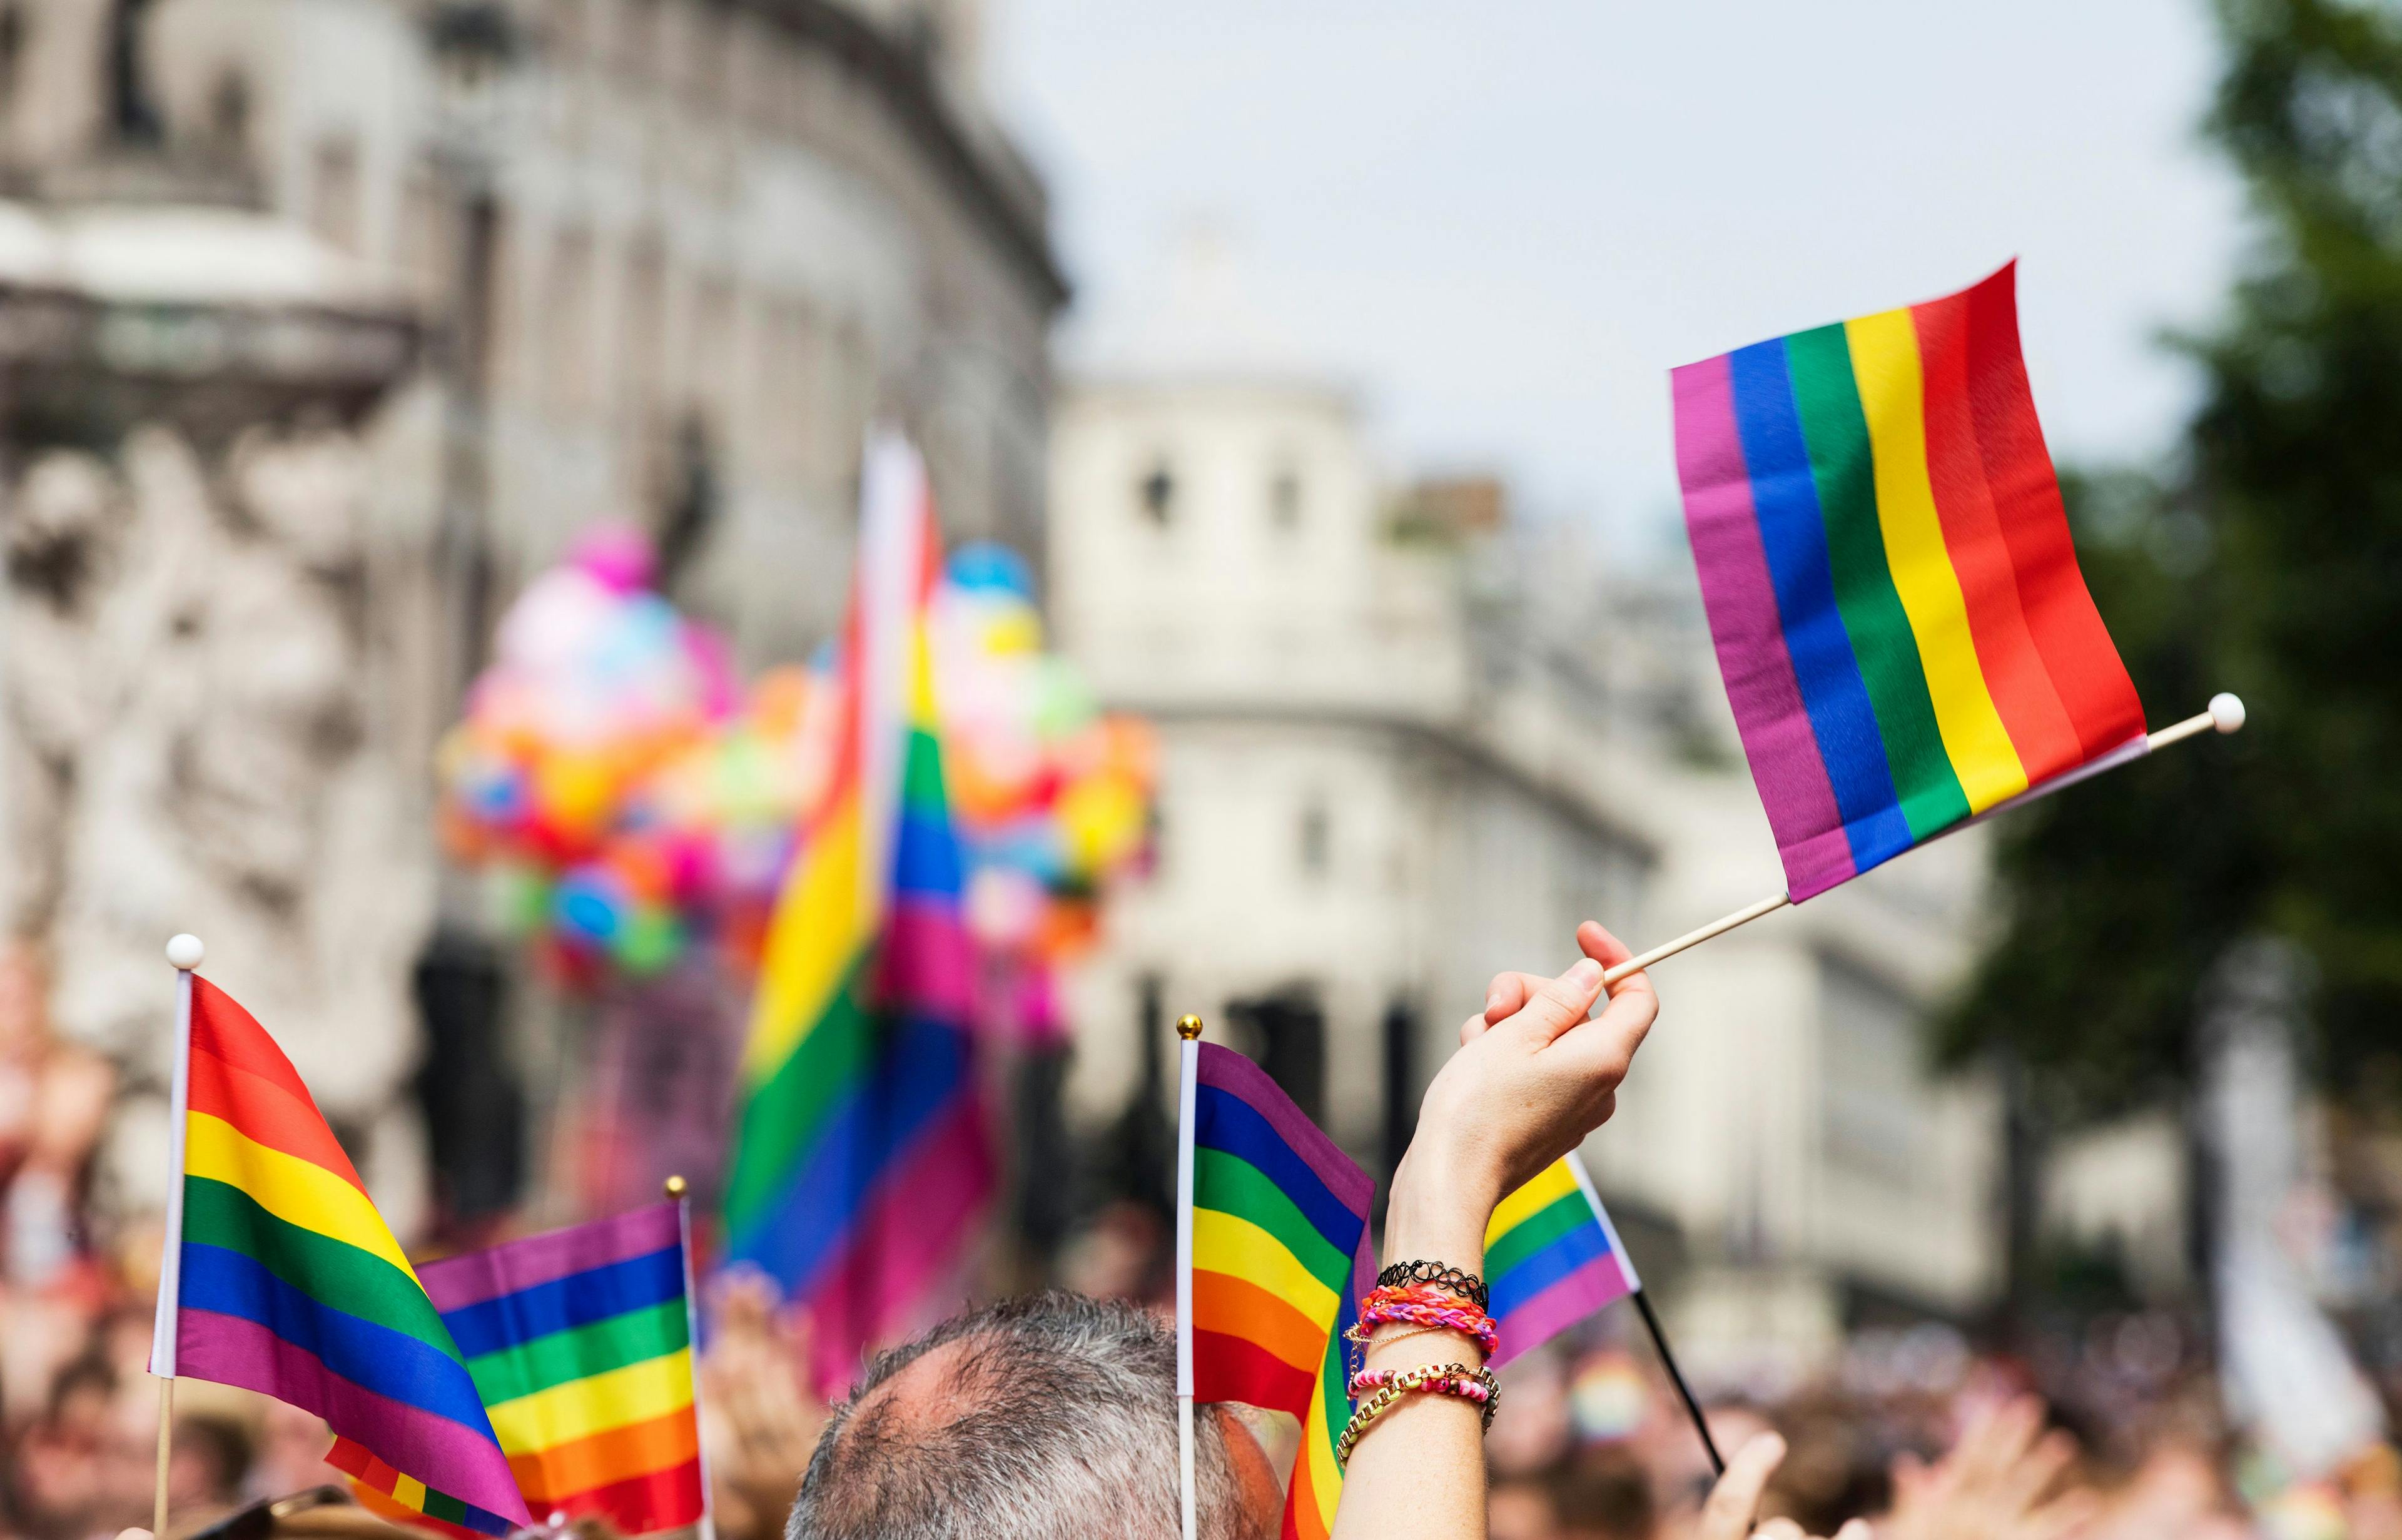 Pride flags during pride event -- Image credit: ink drop | stock.adobe.com